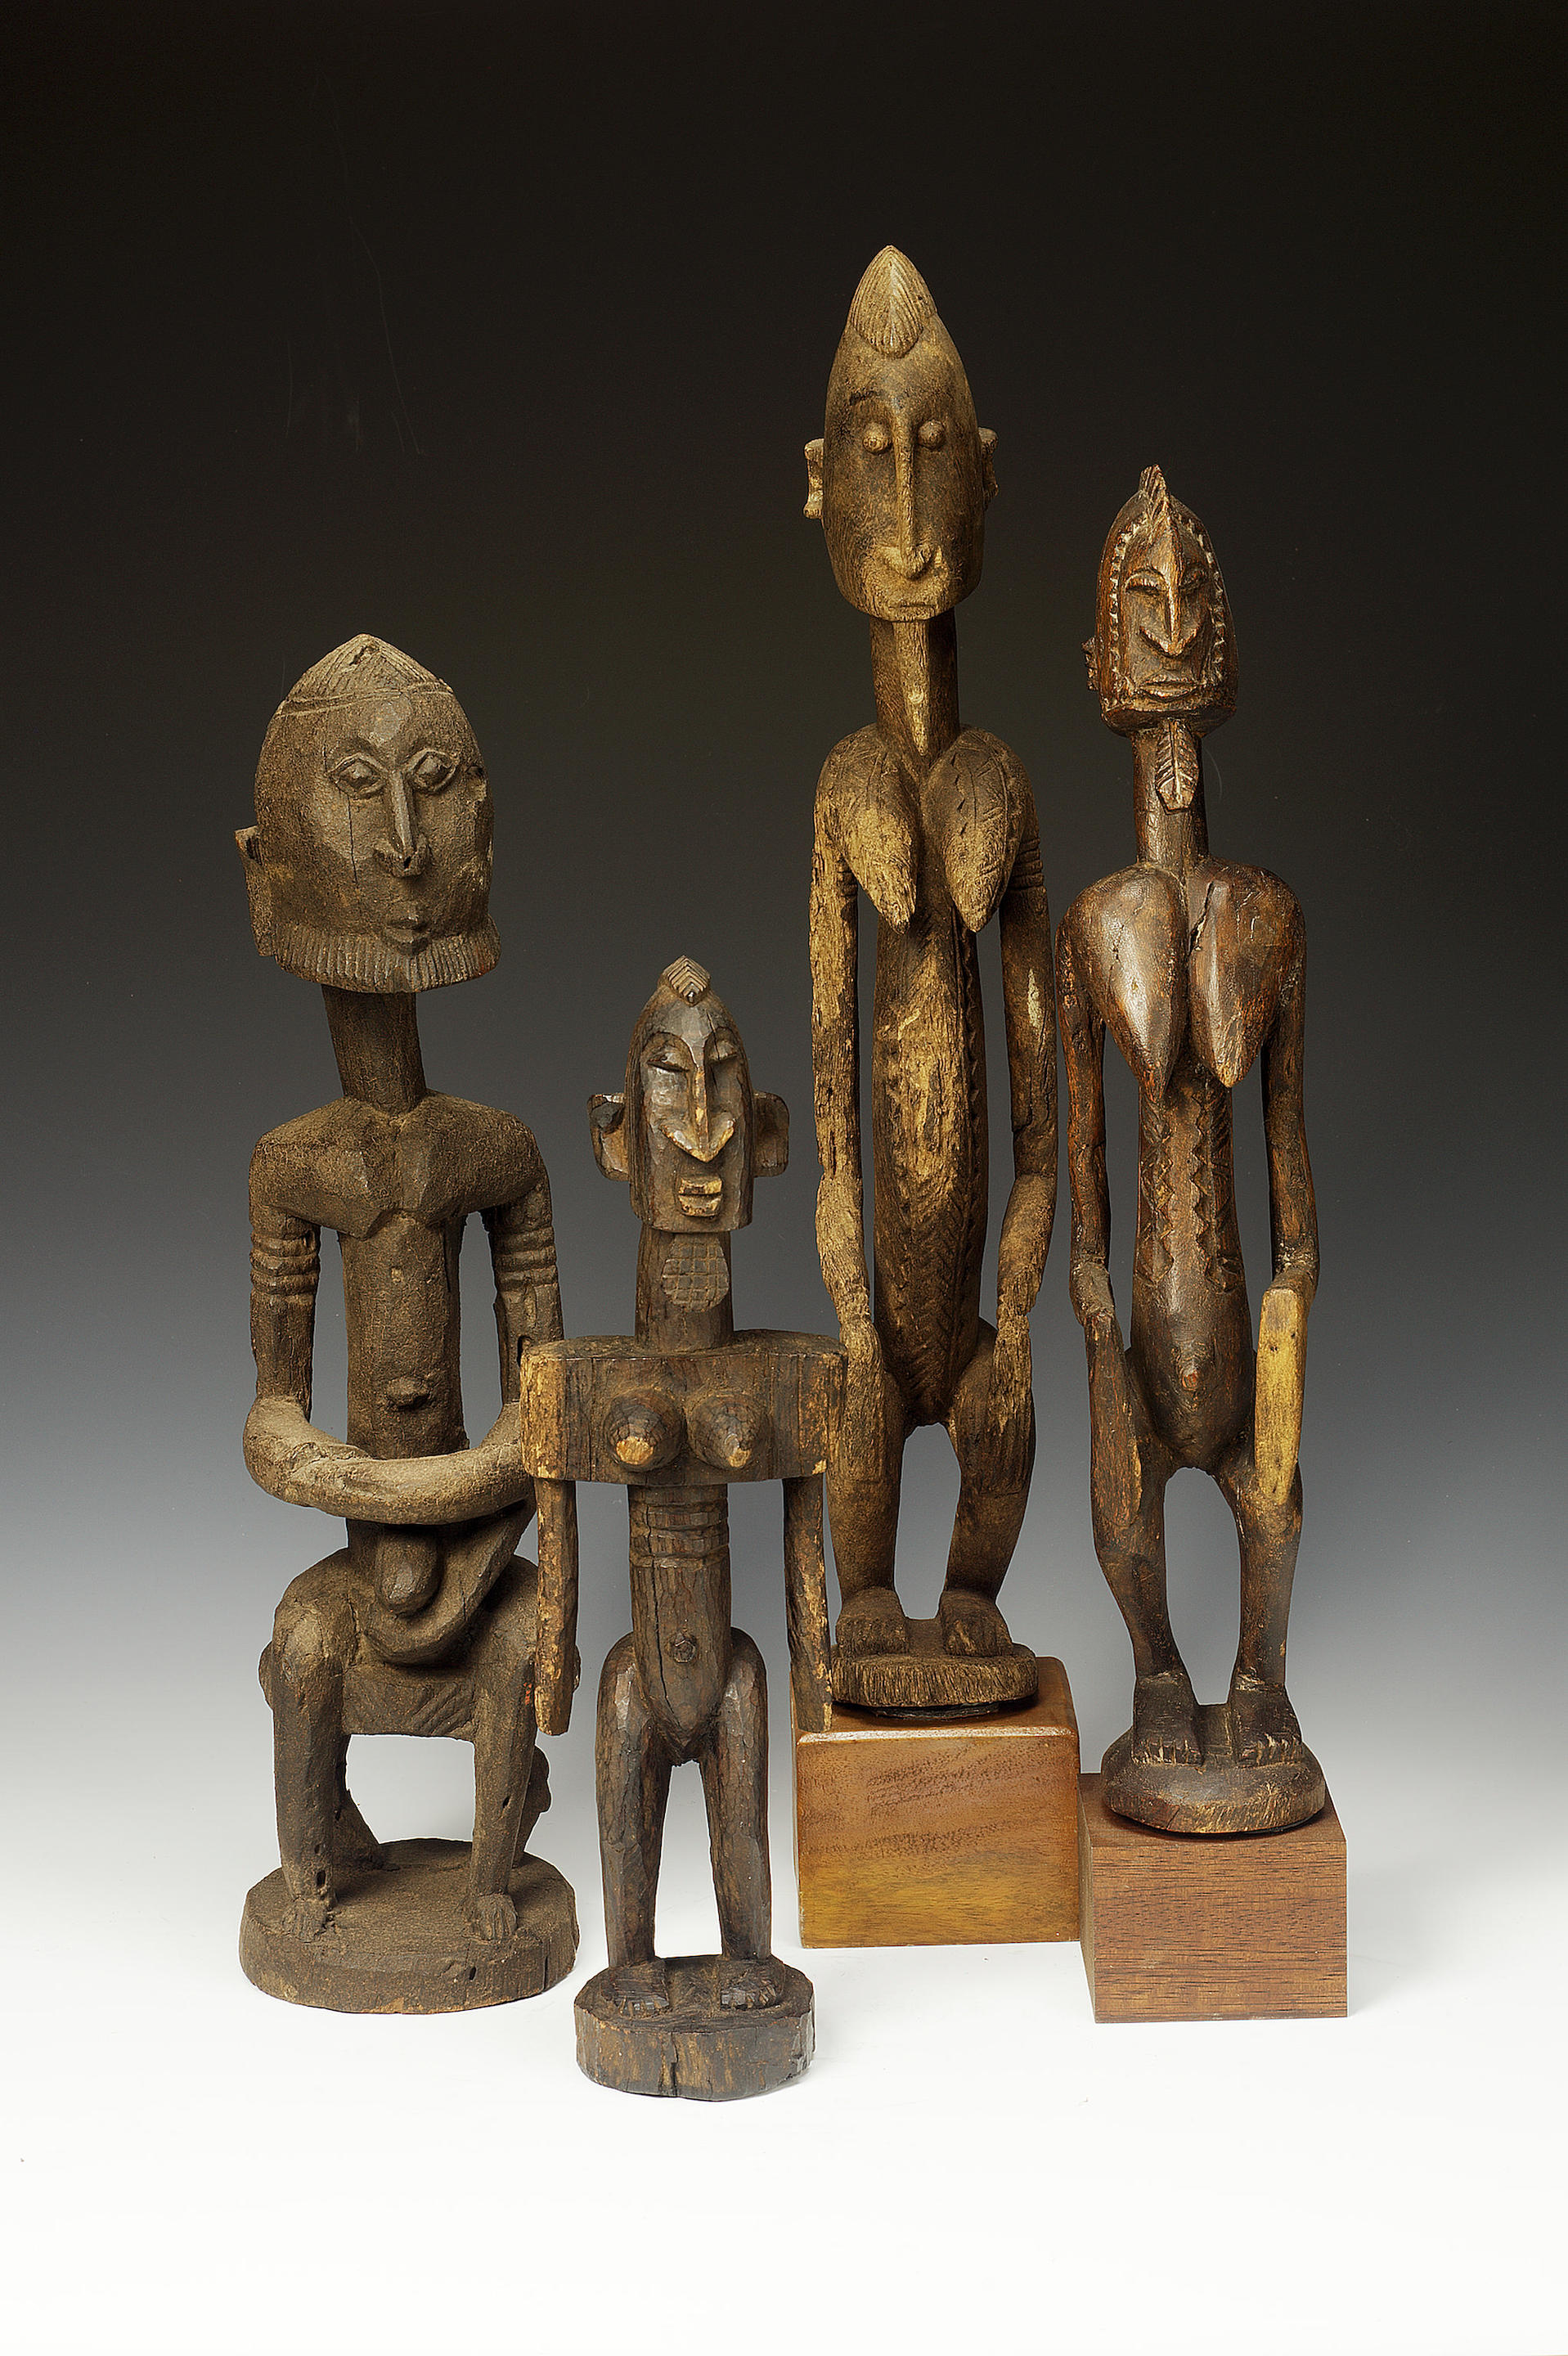 Four smaller Dogon figures